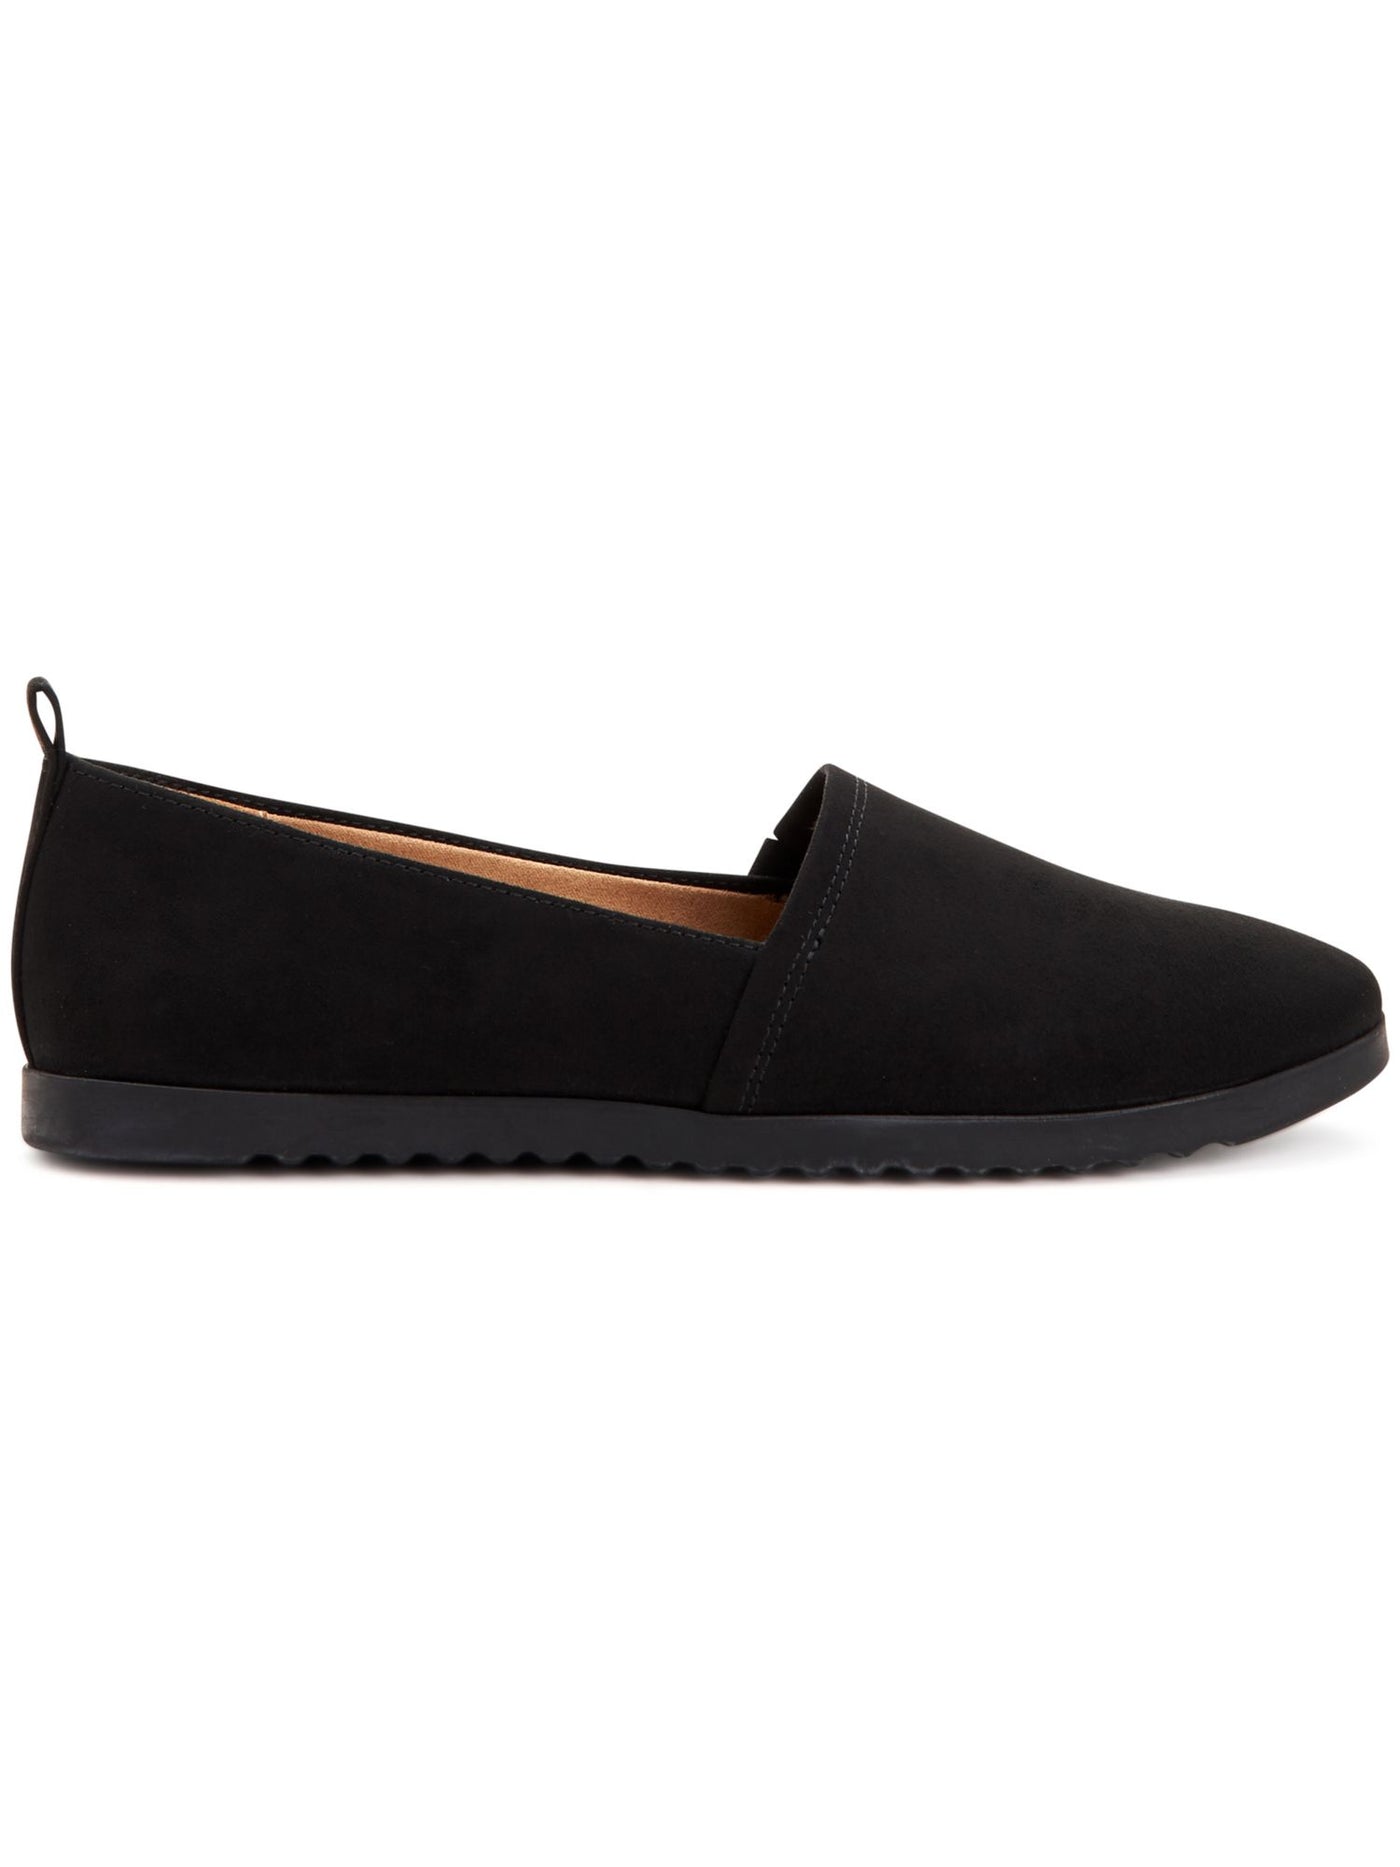 STYLE & COMPANY Womens Black Goring Padded Noura Round Toe Slip On Flats Shoes 10 M